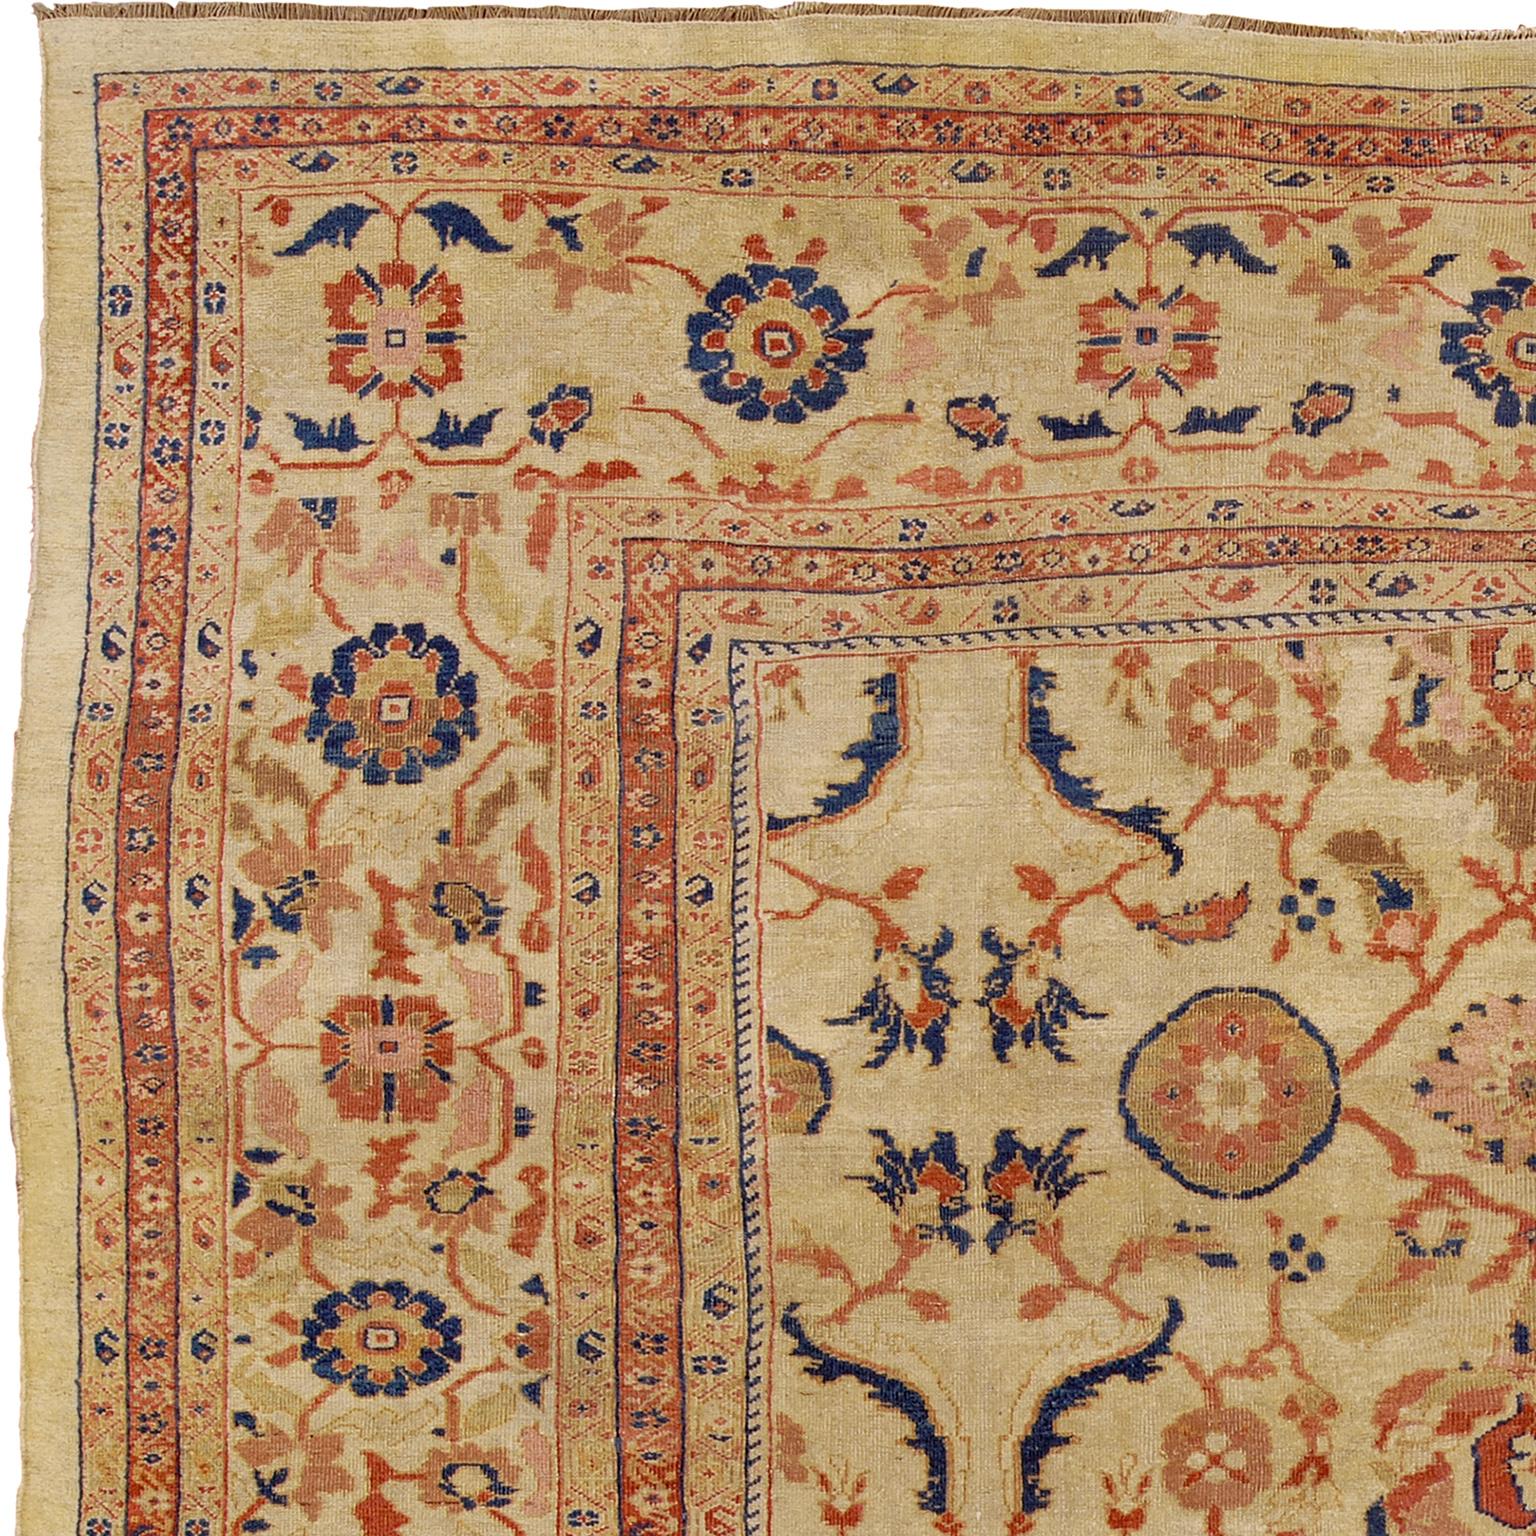 Persia ca. 1890
Measures: 11'1